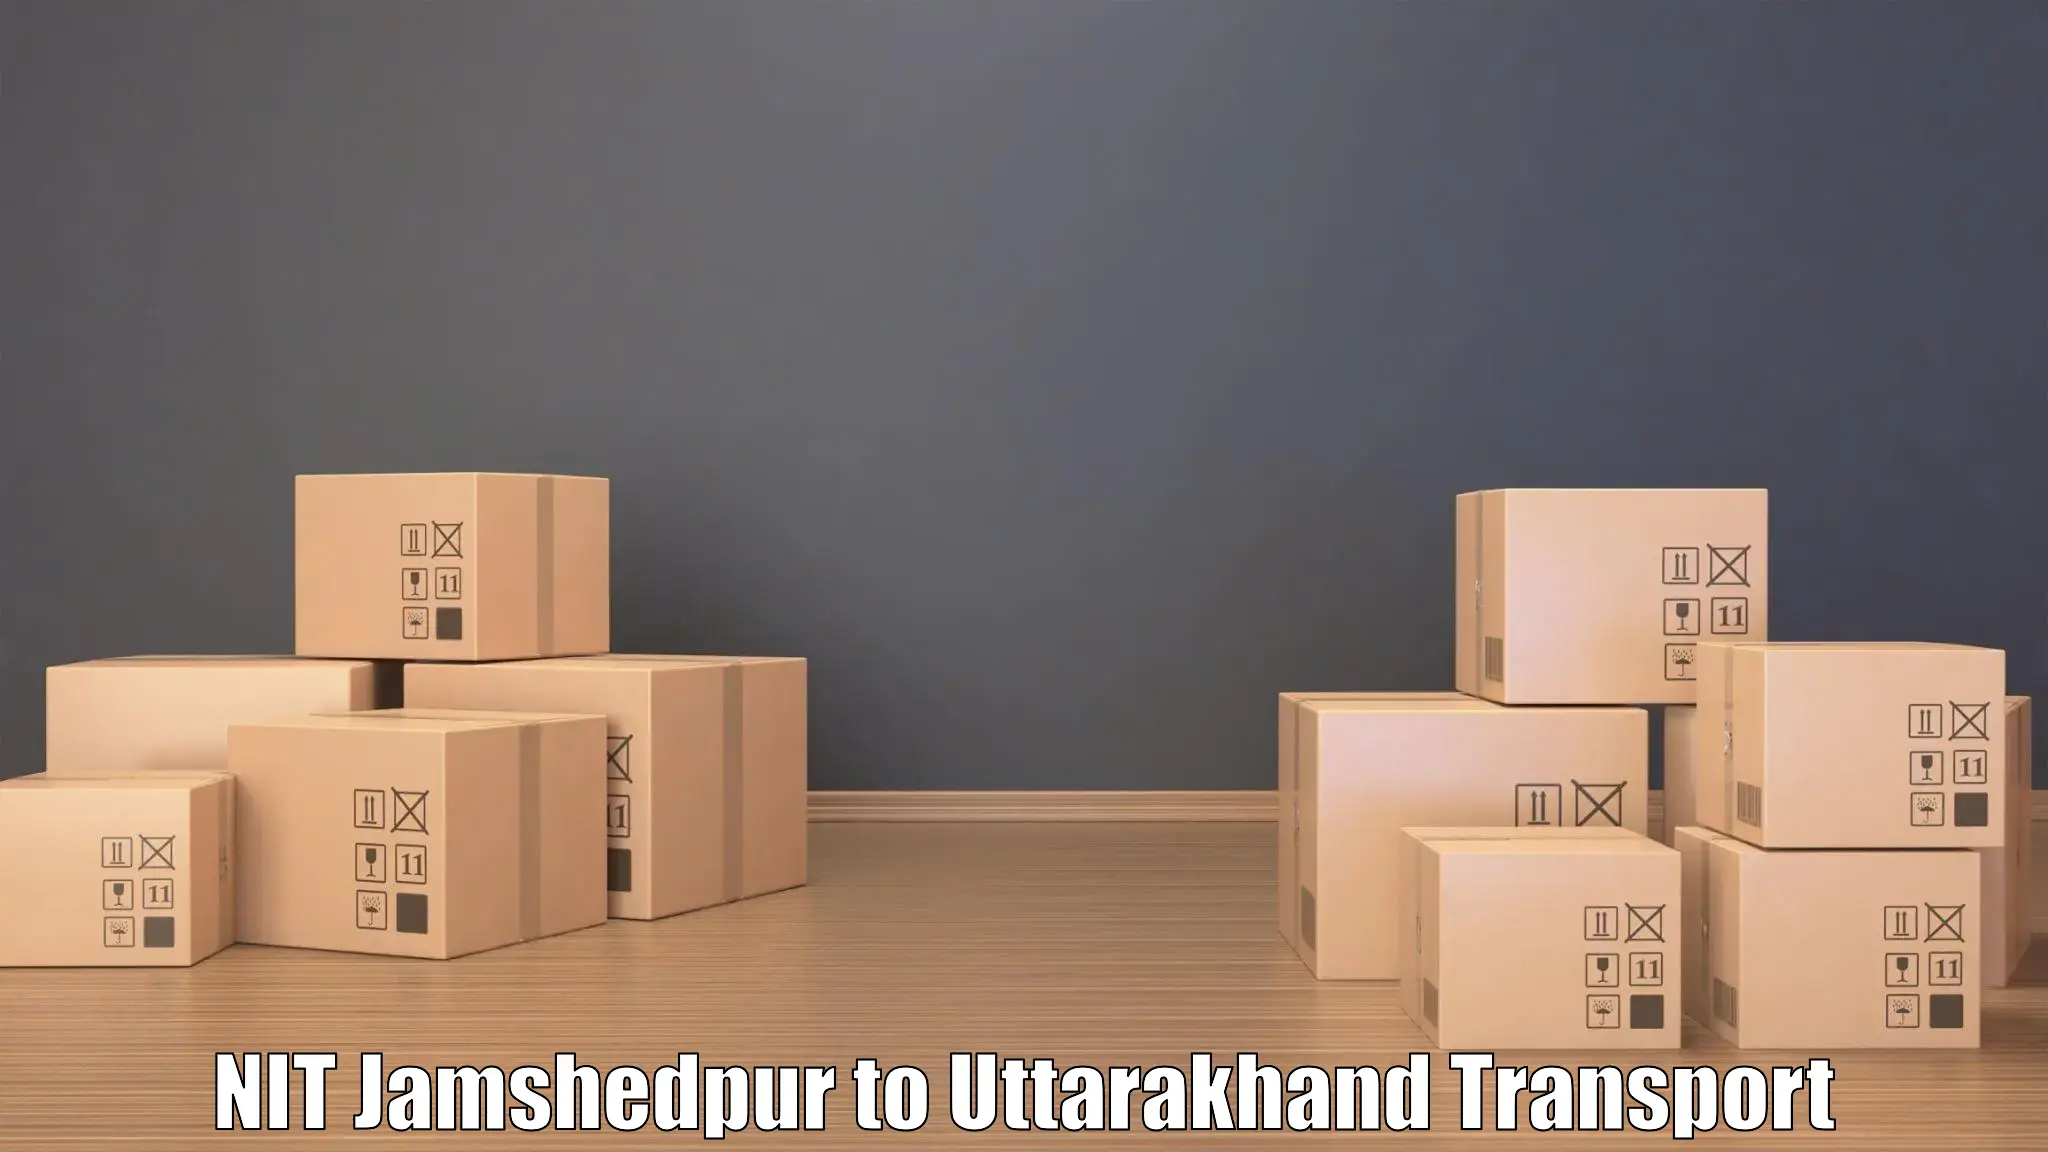 Vehicle transport services NIT Jamshedpur to Dehradun